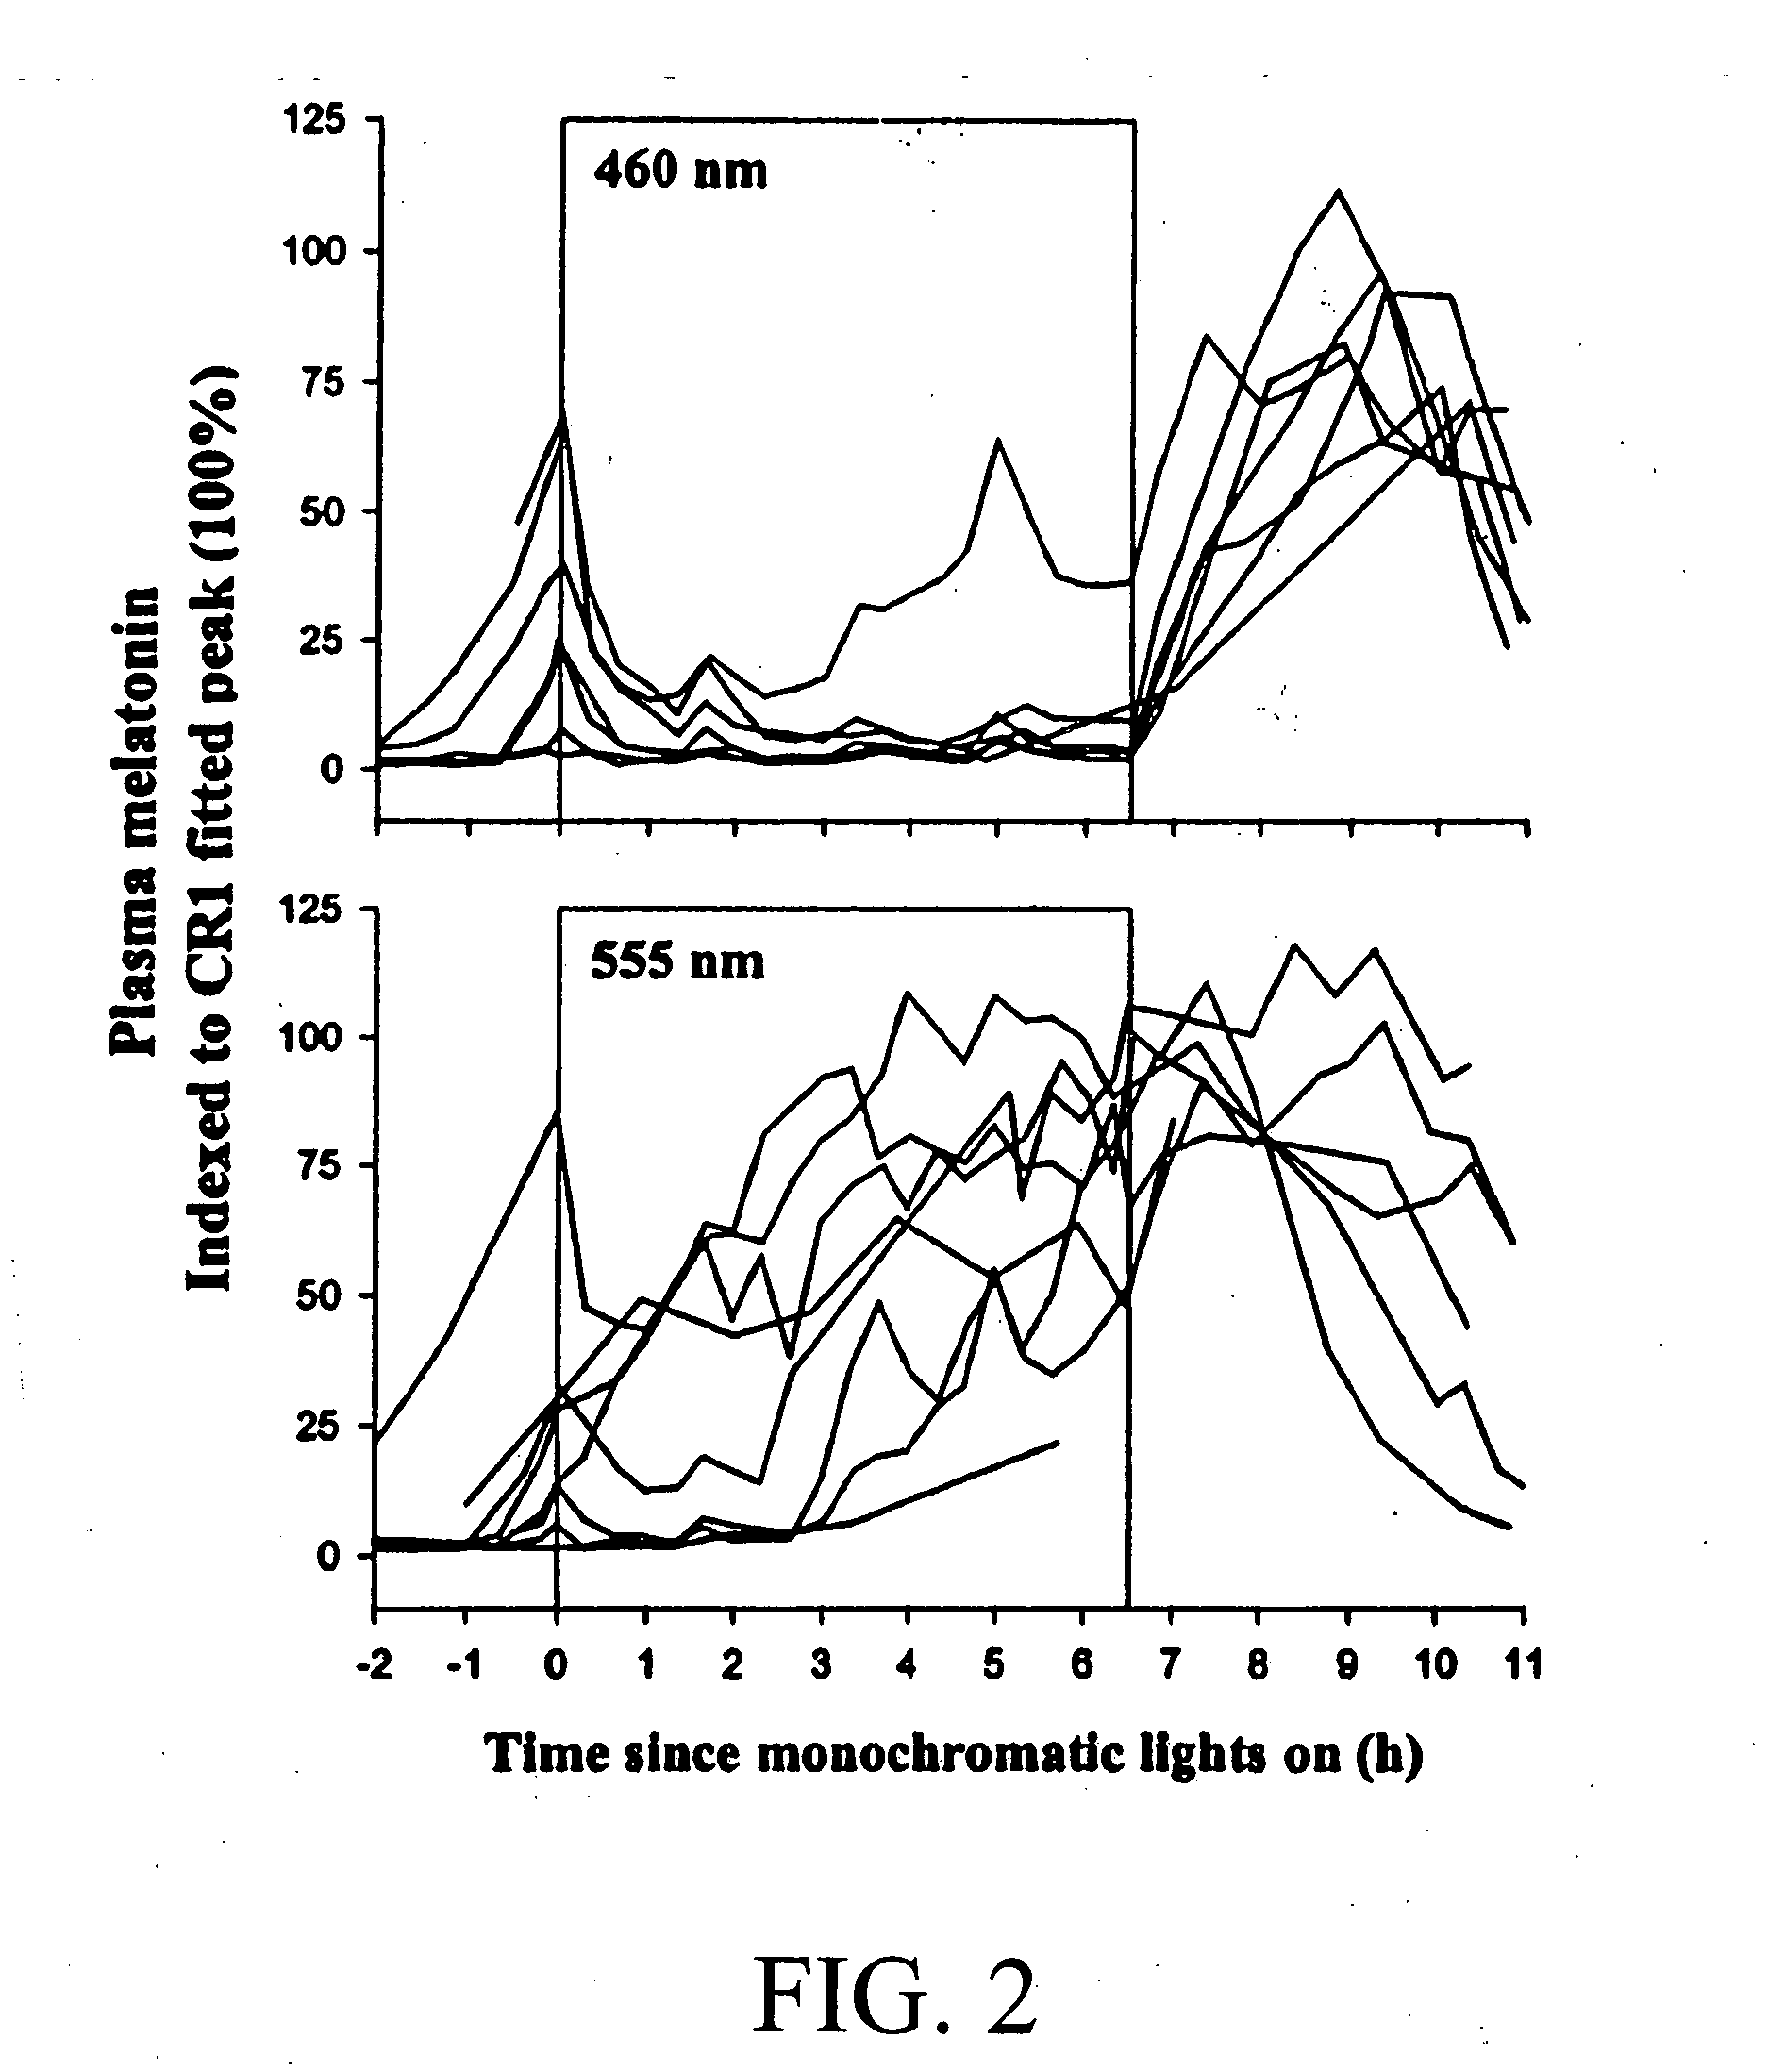 Method for modifying or resetting the circadian cycle using short wavelength light